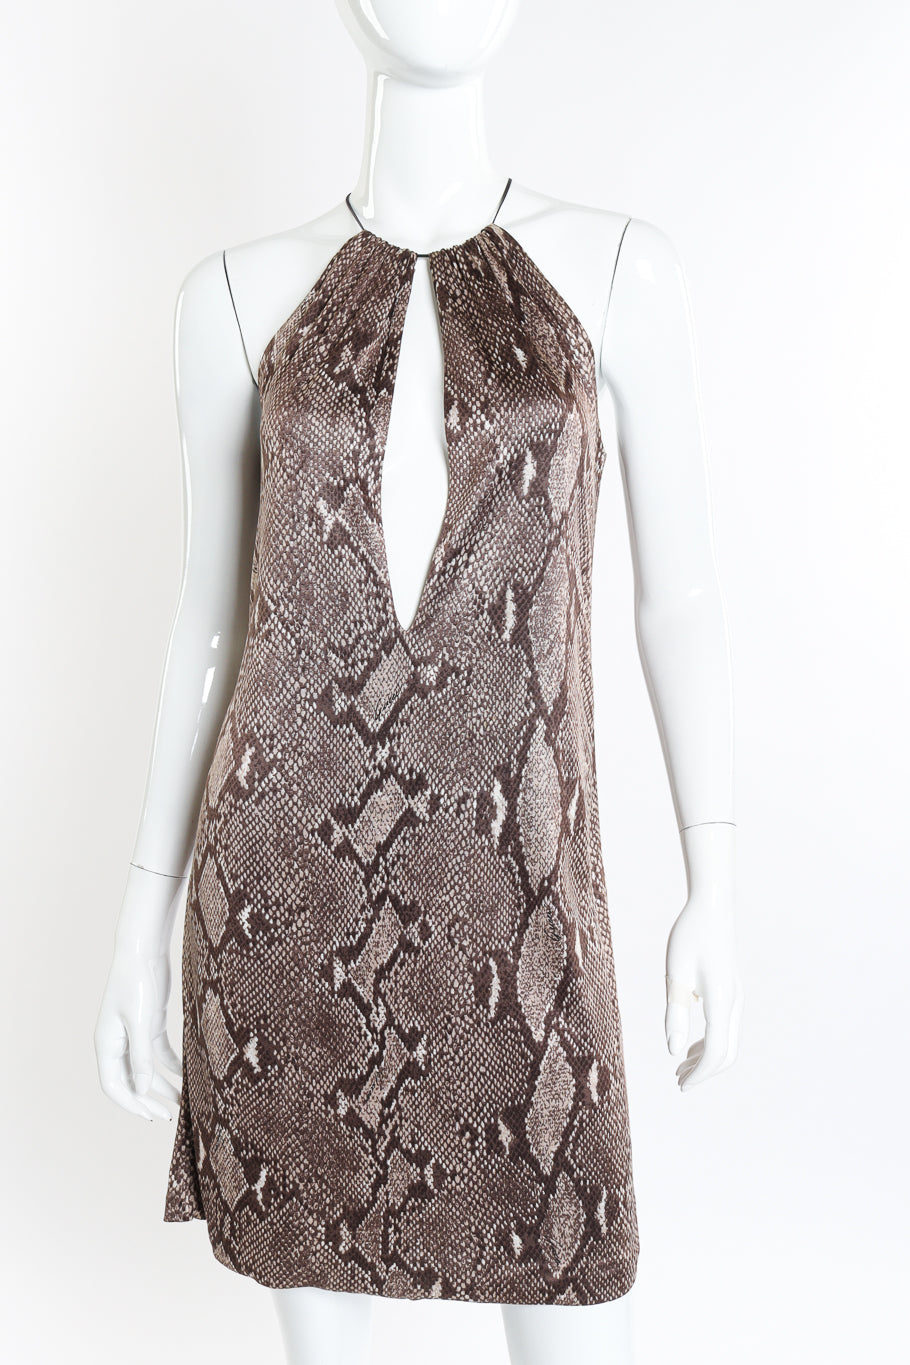 2000 S/S Python Mini Dress by Gucci on mannequin @recessla